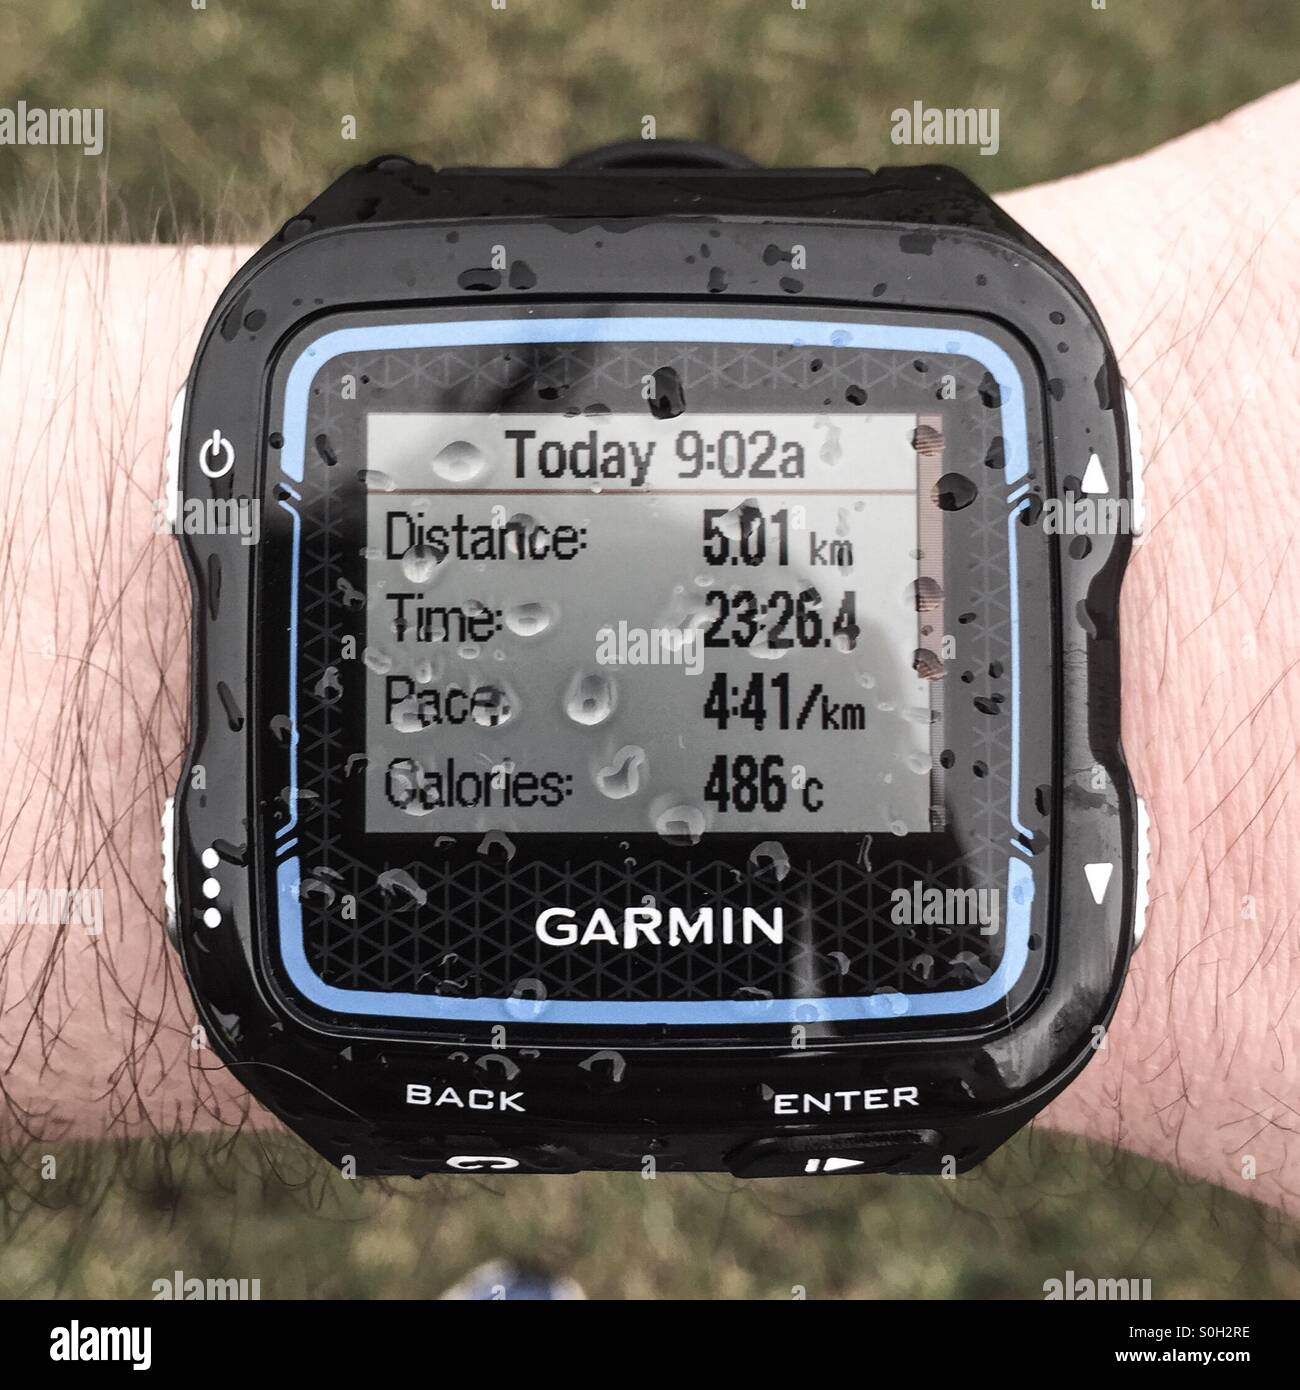 Newcastle, UK - 22 July 2015 - The Garmin Forerunner 920xt GPS smartwatch  showing a run summary screen after a rainy 5km run Stock Photo - Alamy